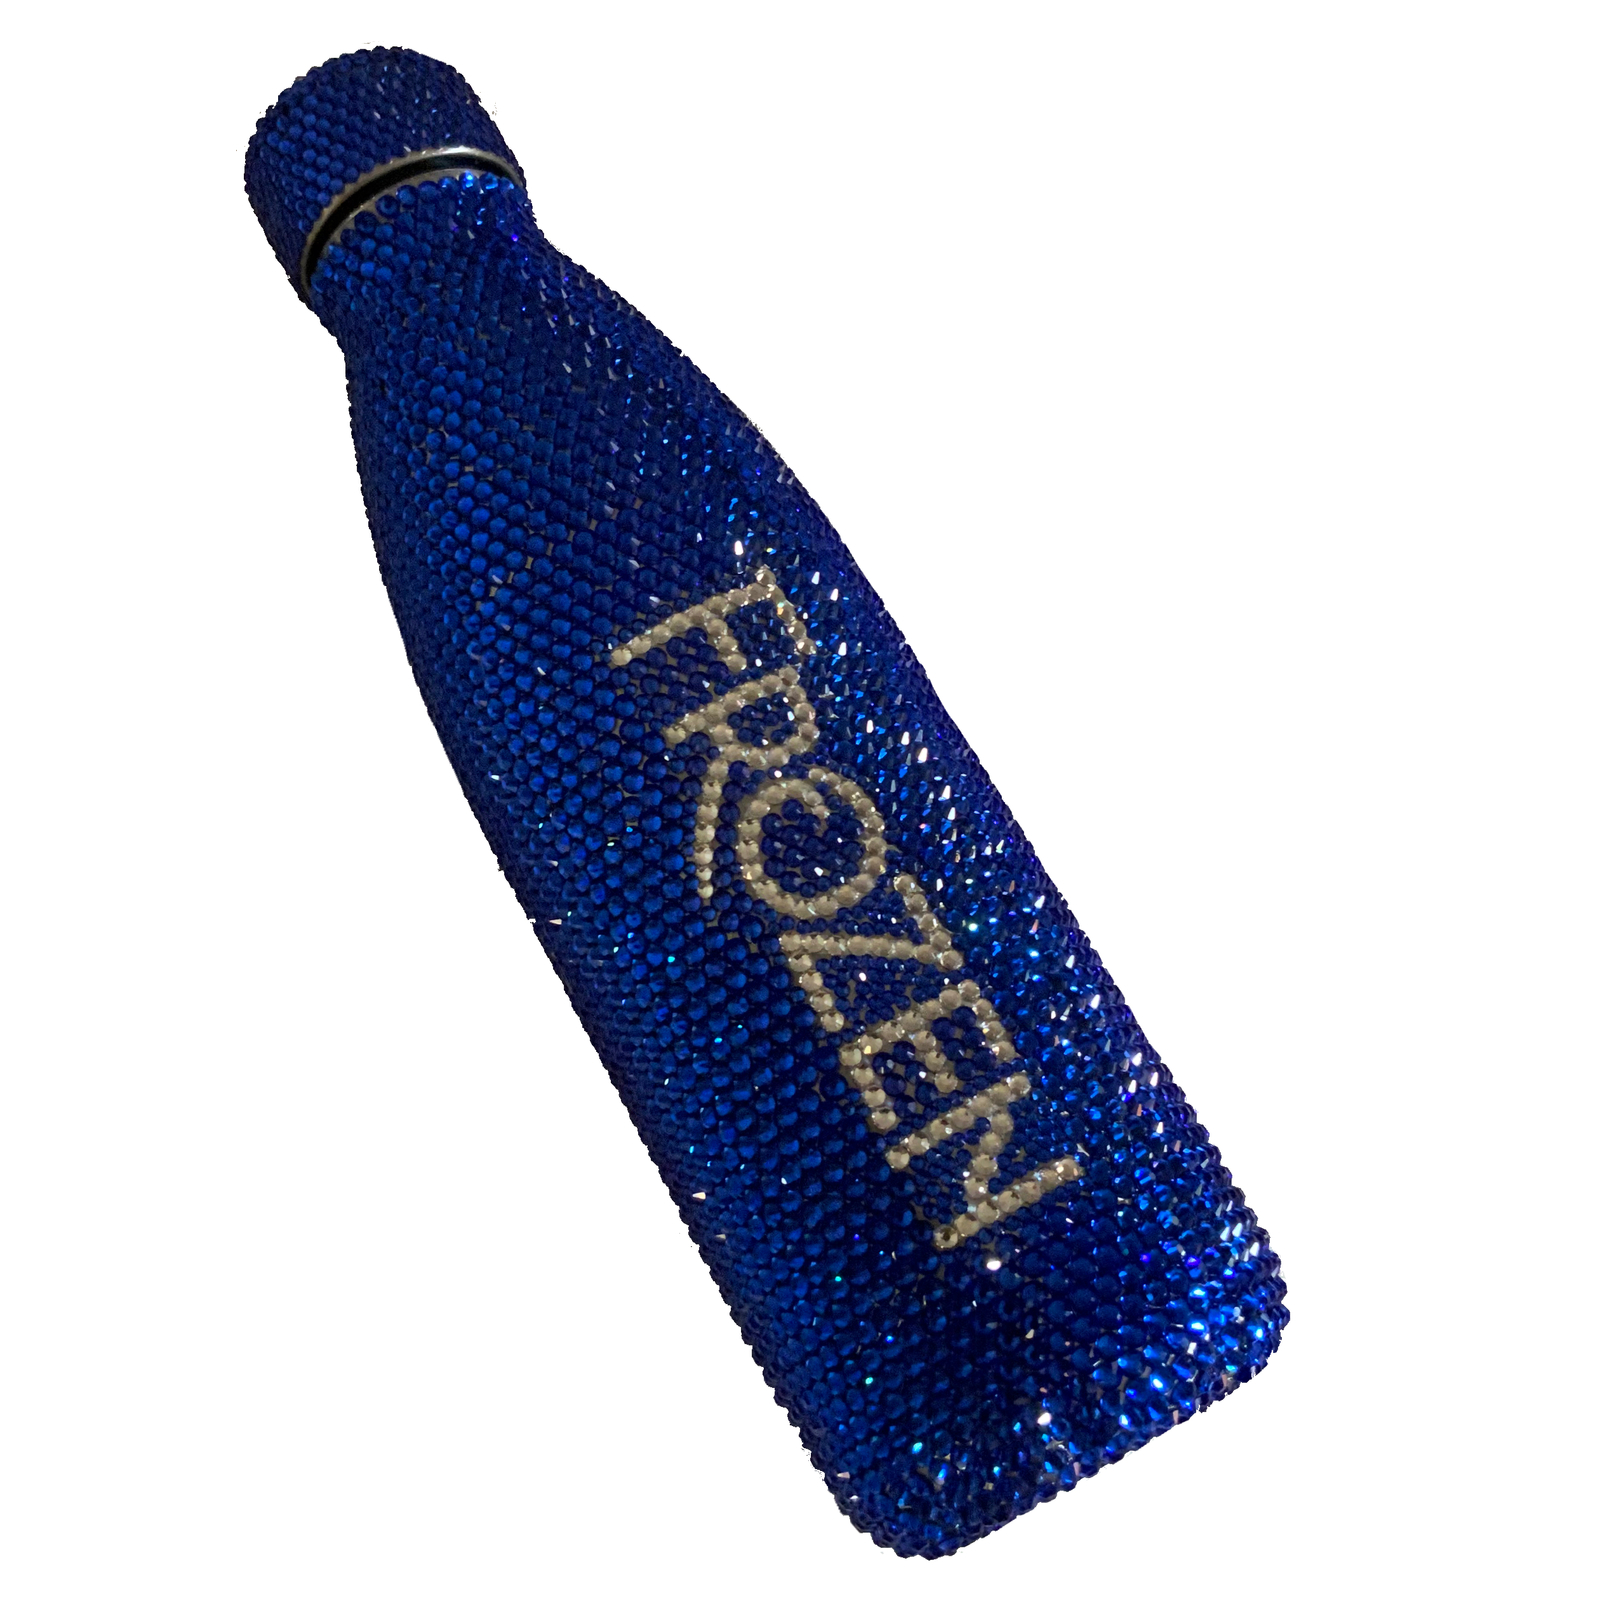 Aladdin the Broadway Musical - Logo Metal Water Bottle - Aladdin the  Musical